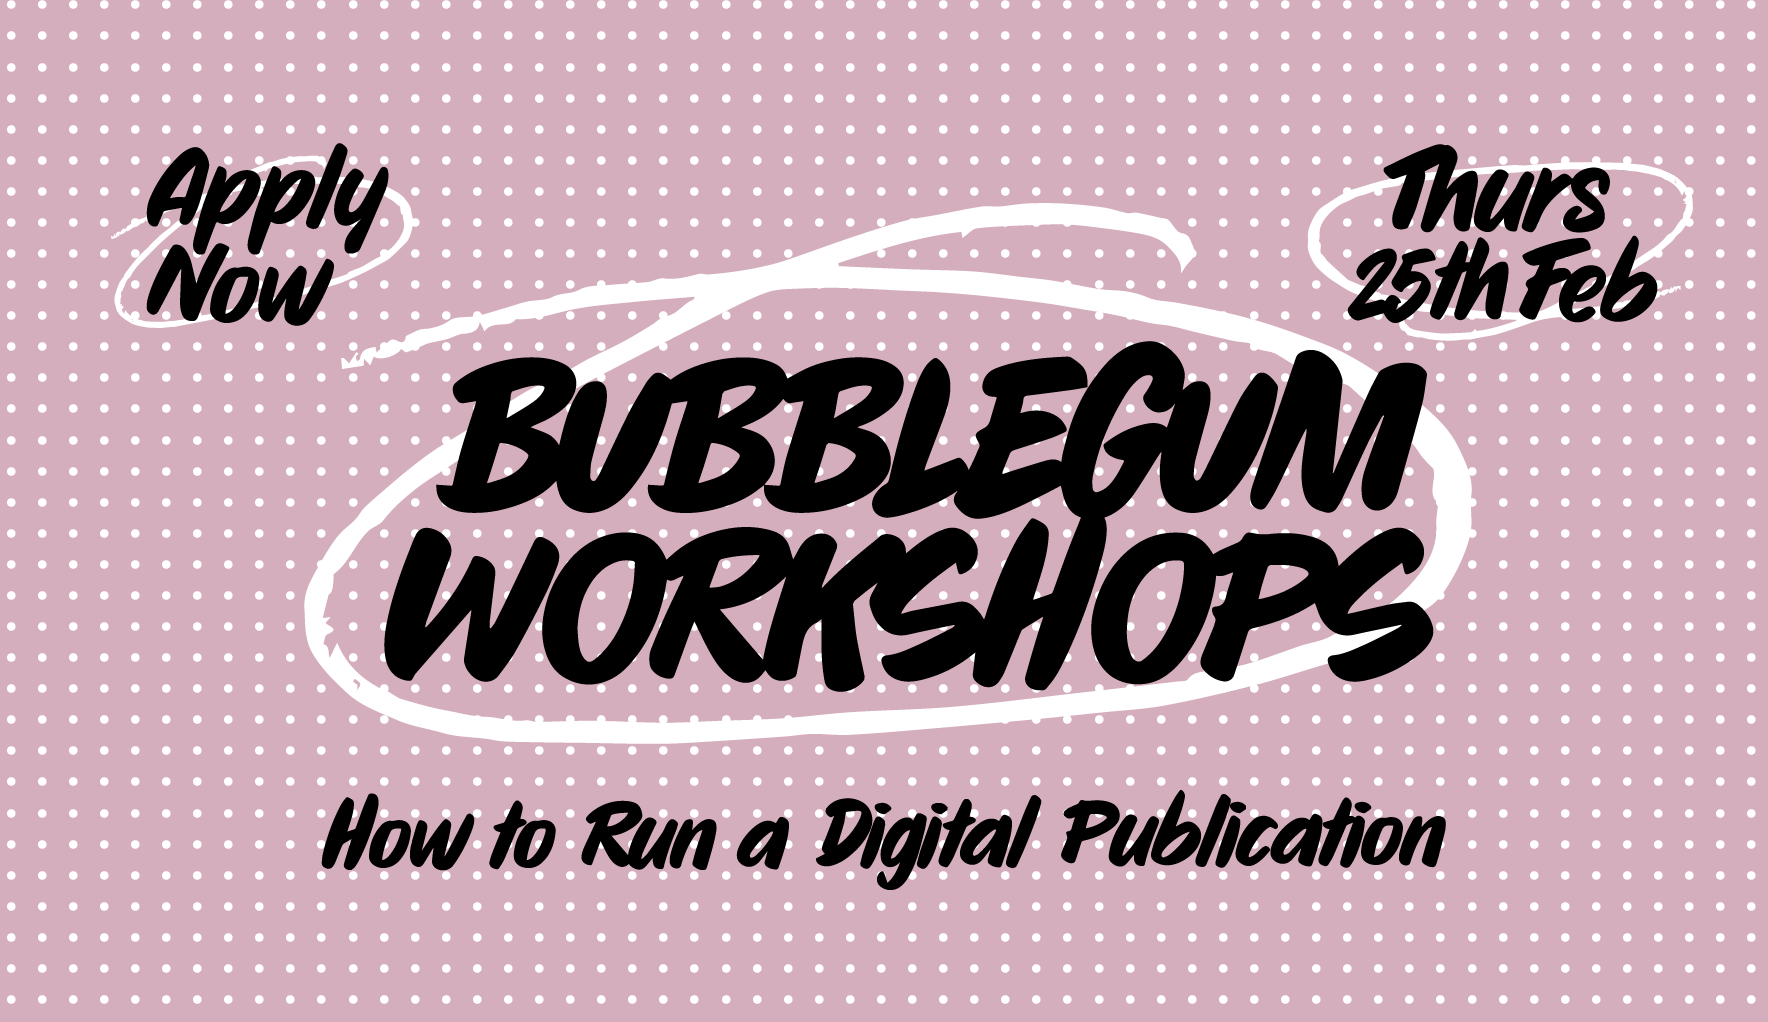 Introducing Bubblegum Workshops Running A Digital Publication